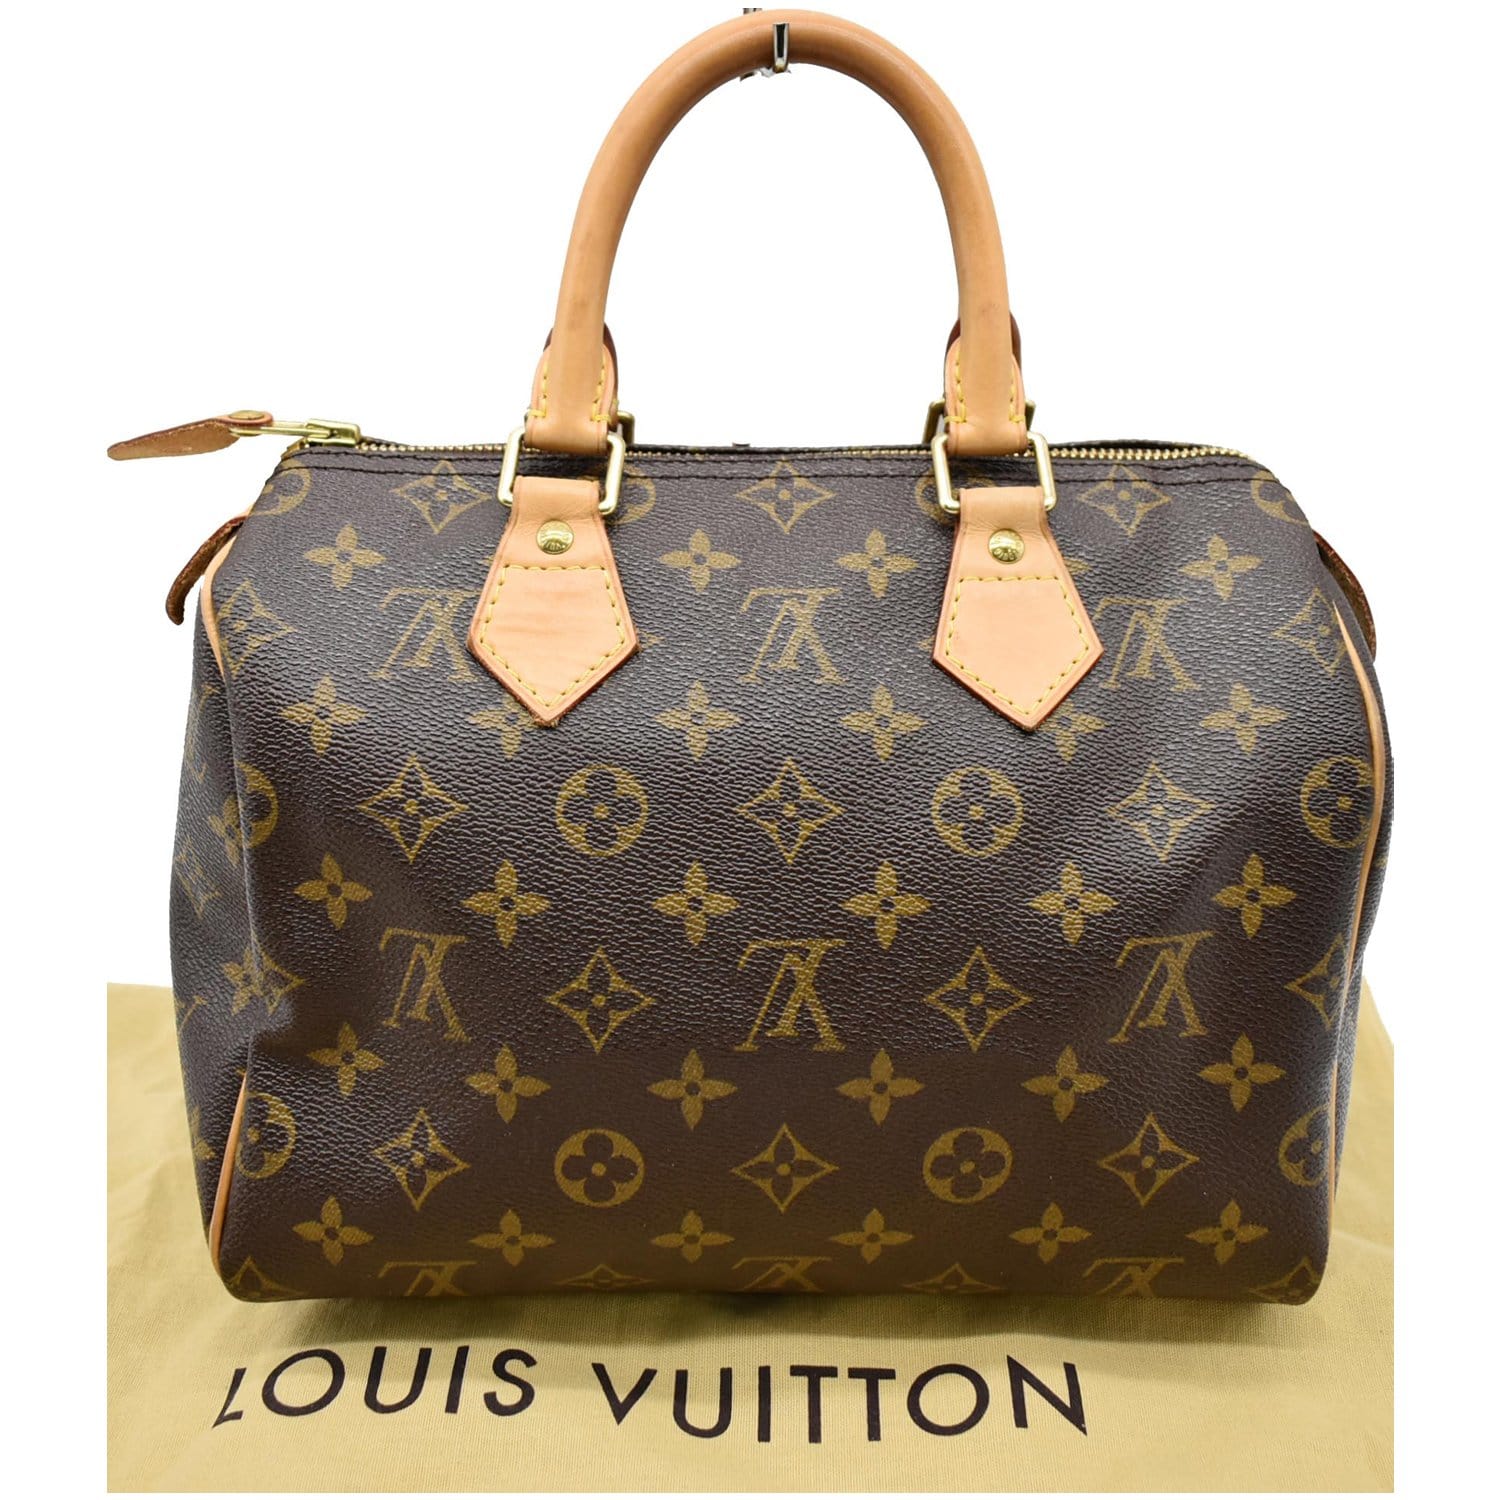 Vintage Louis Vuitton Speedy 25